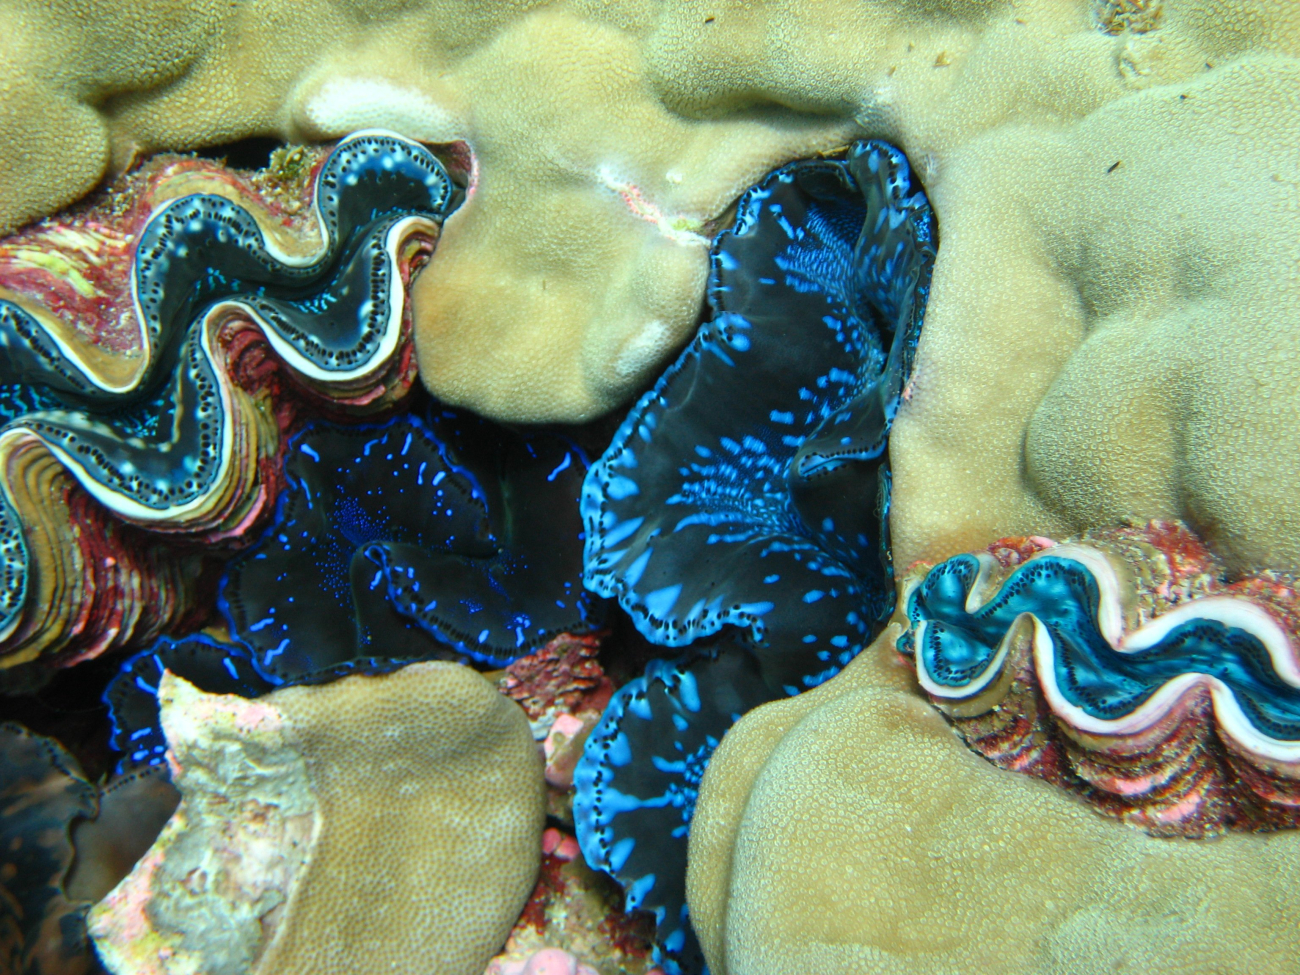 Giant clams (Tridacna sp